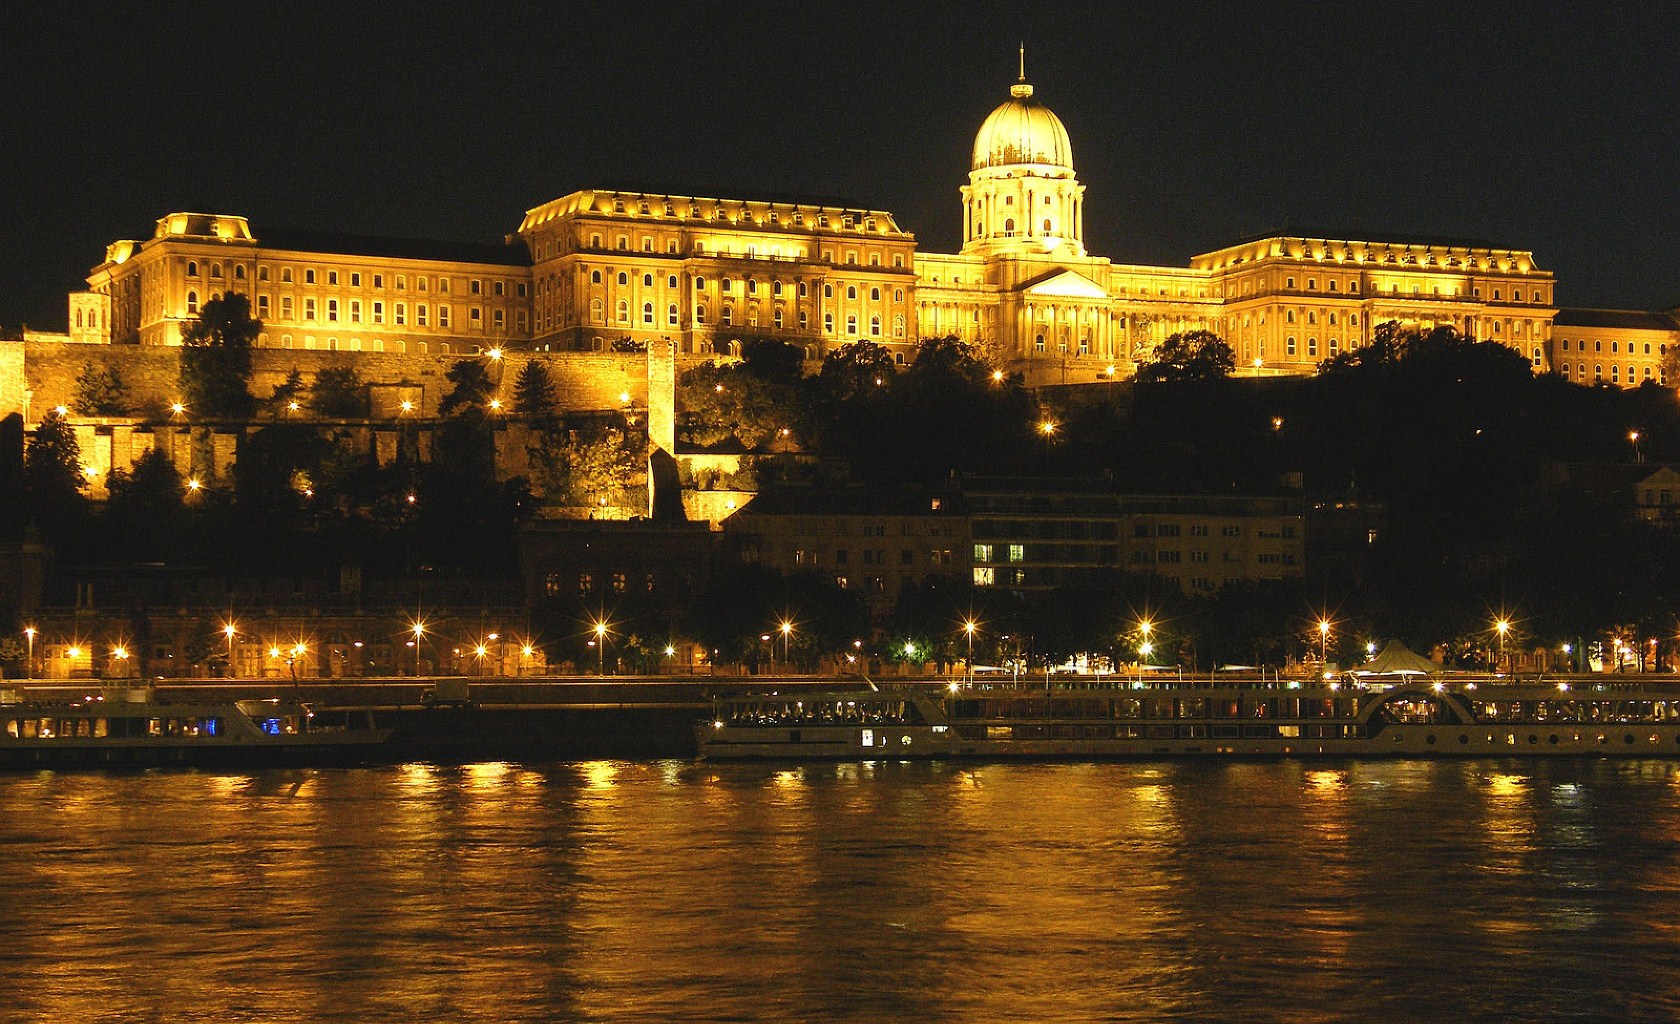 Buda Castle - Budapest - Hungary